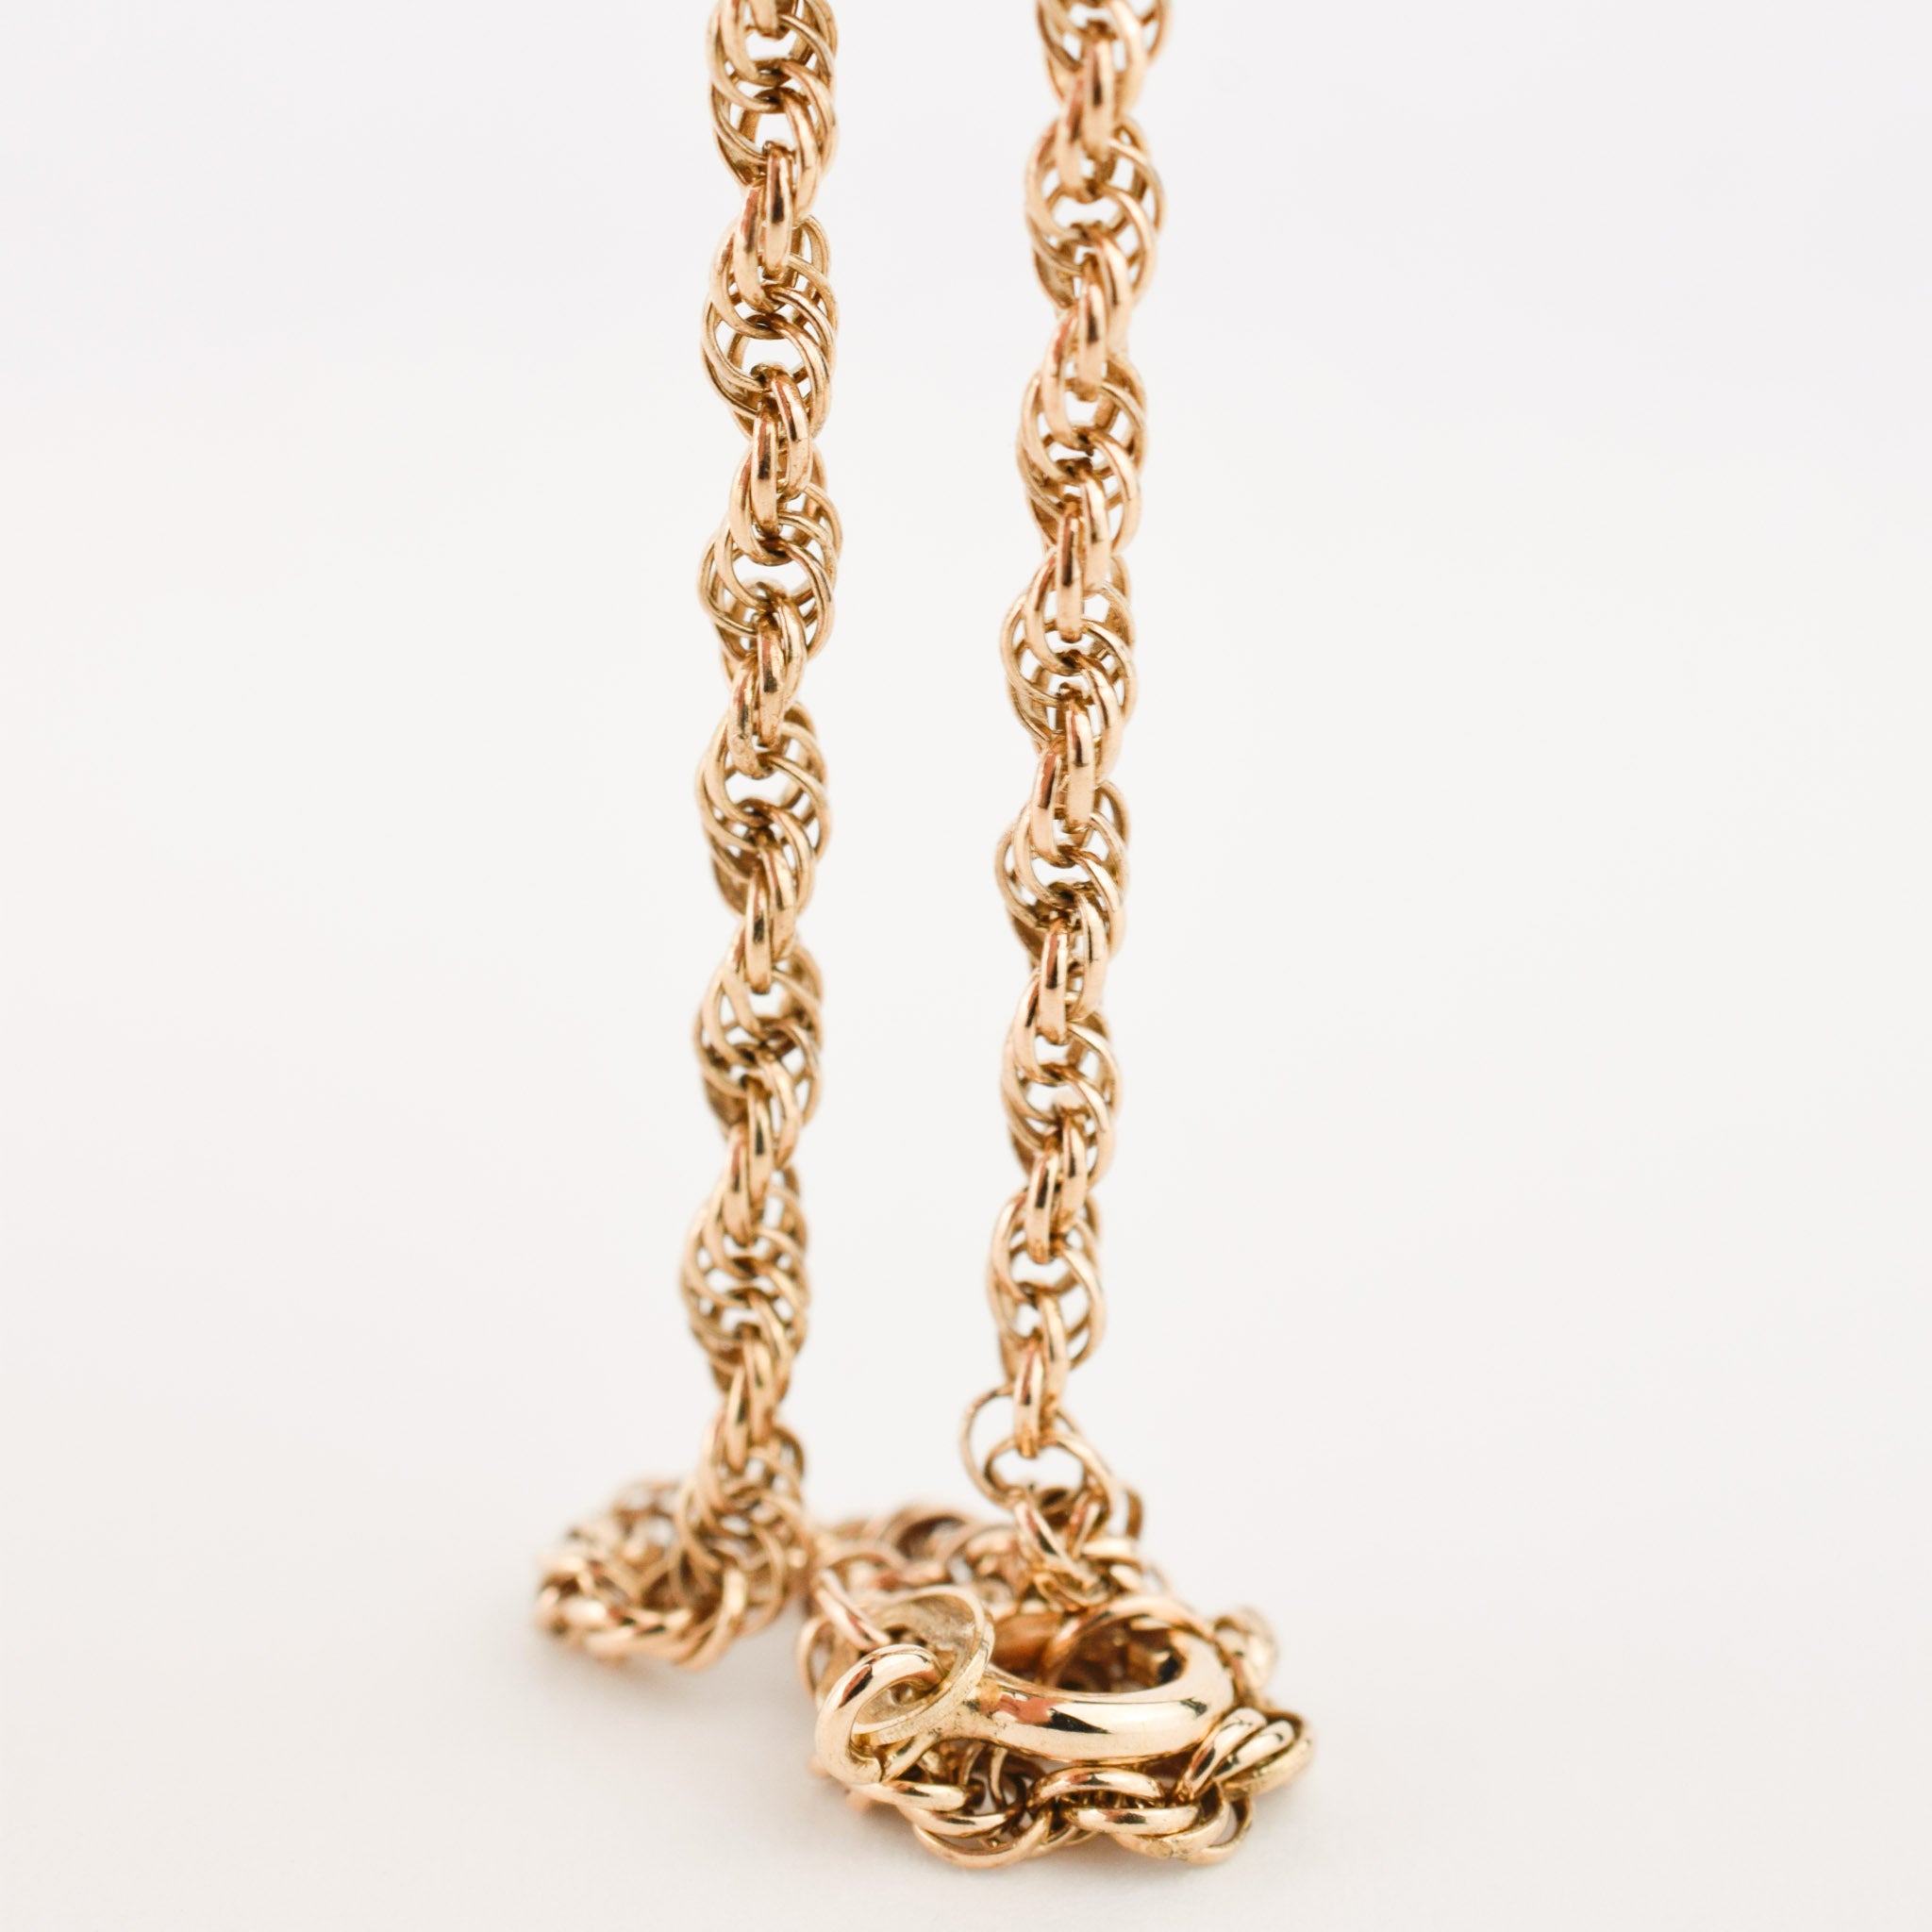 7.5" gold Rope Chain Bracelet